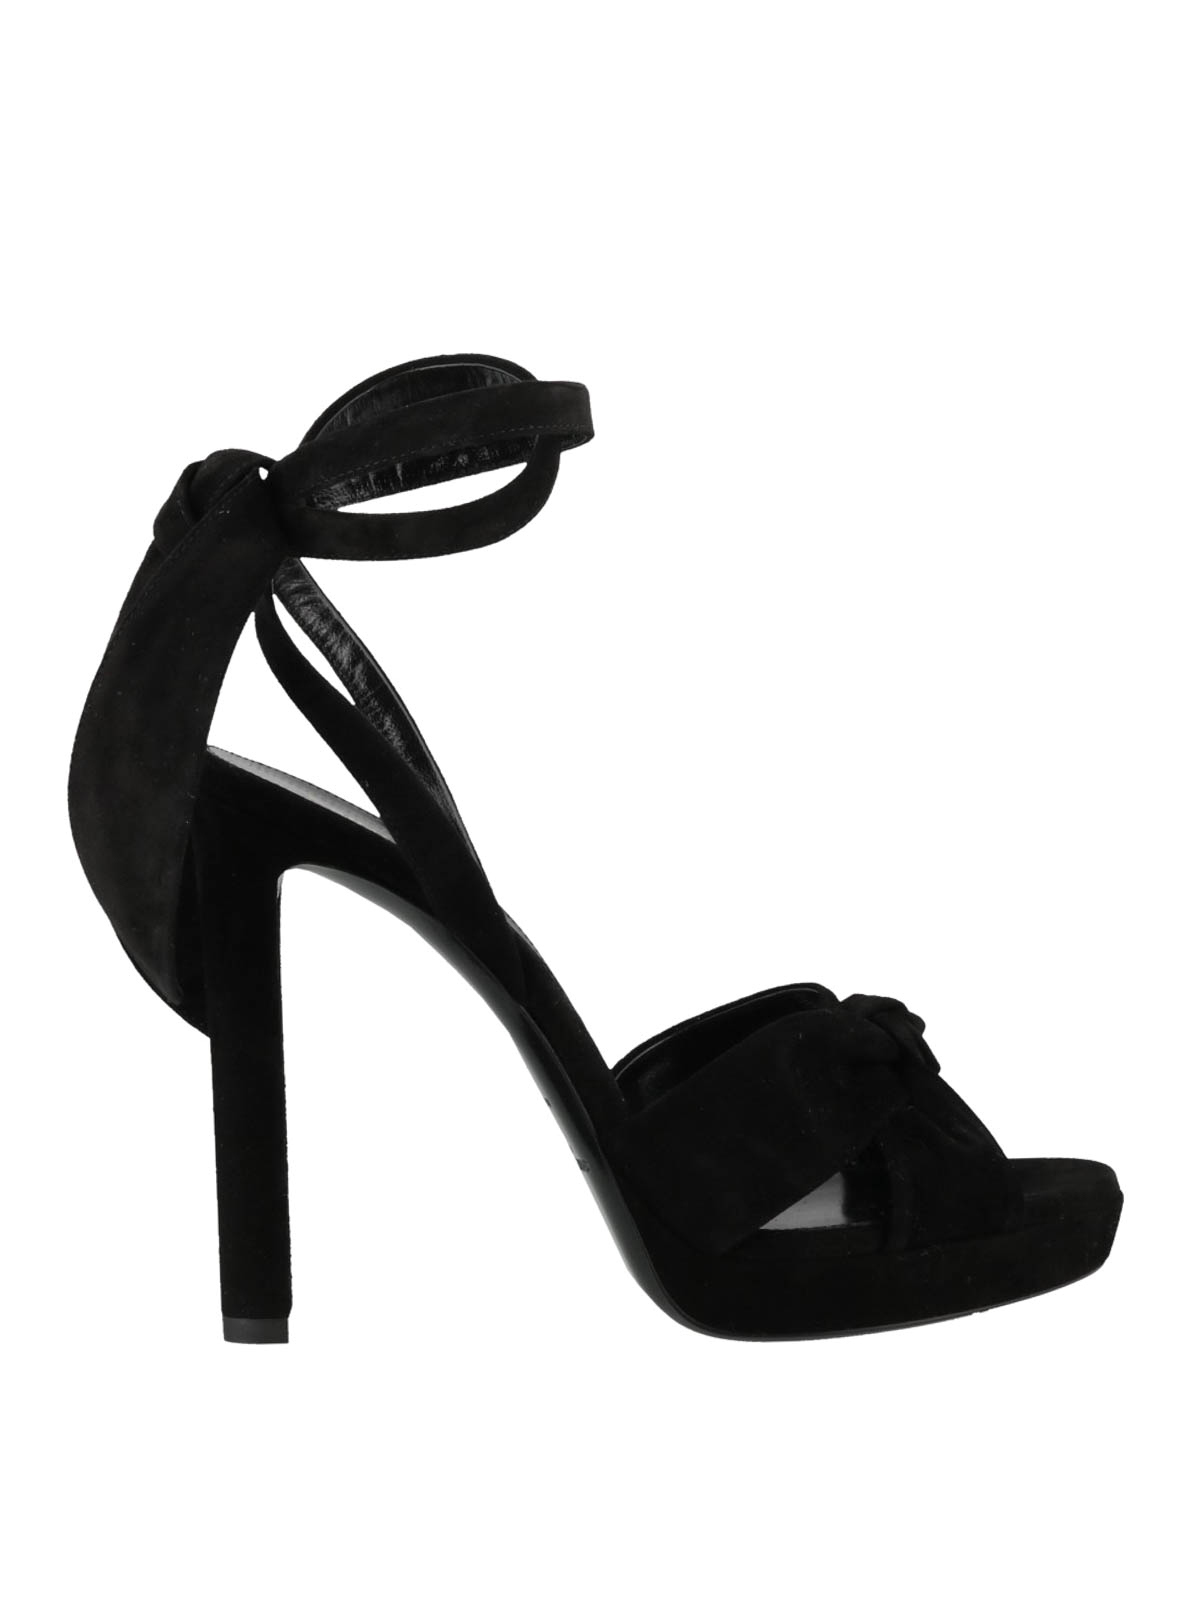 Sandals Saint Laurent - Hall 105 black suede heeled sandals 